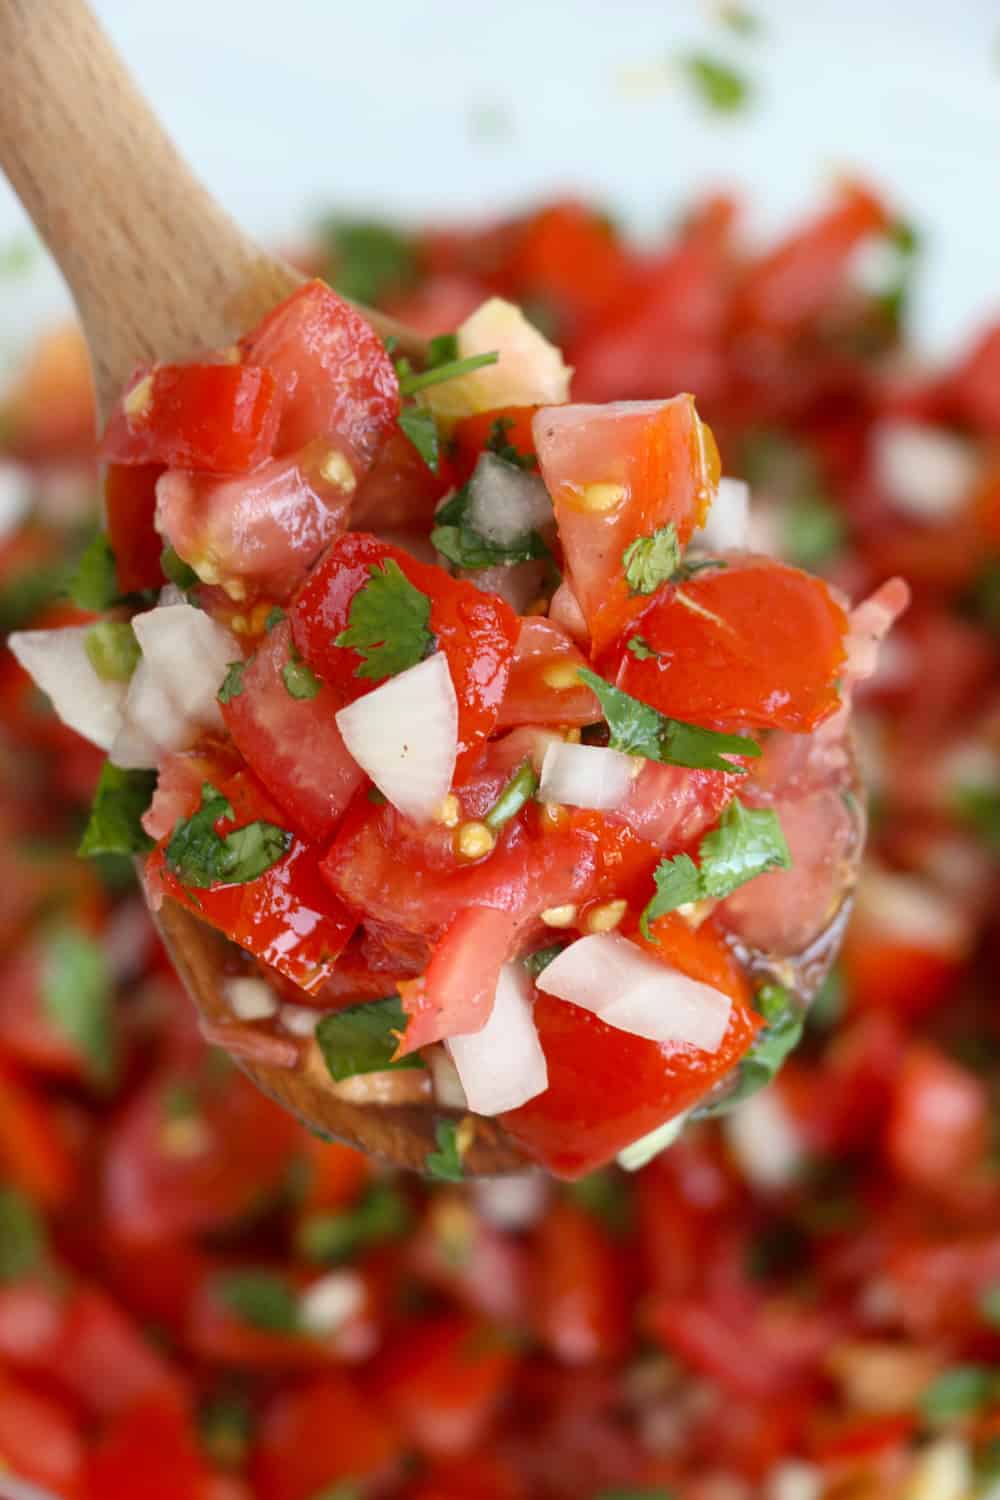 Homemade salsa with fresh tomatoes